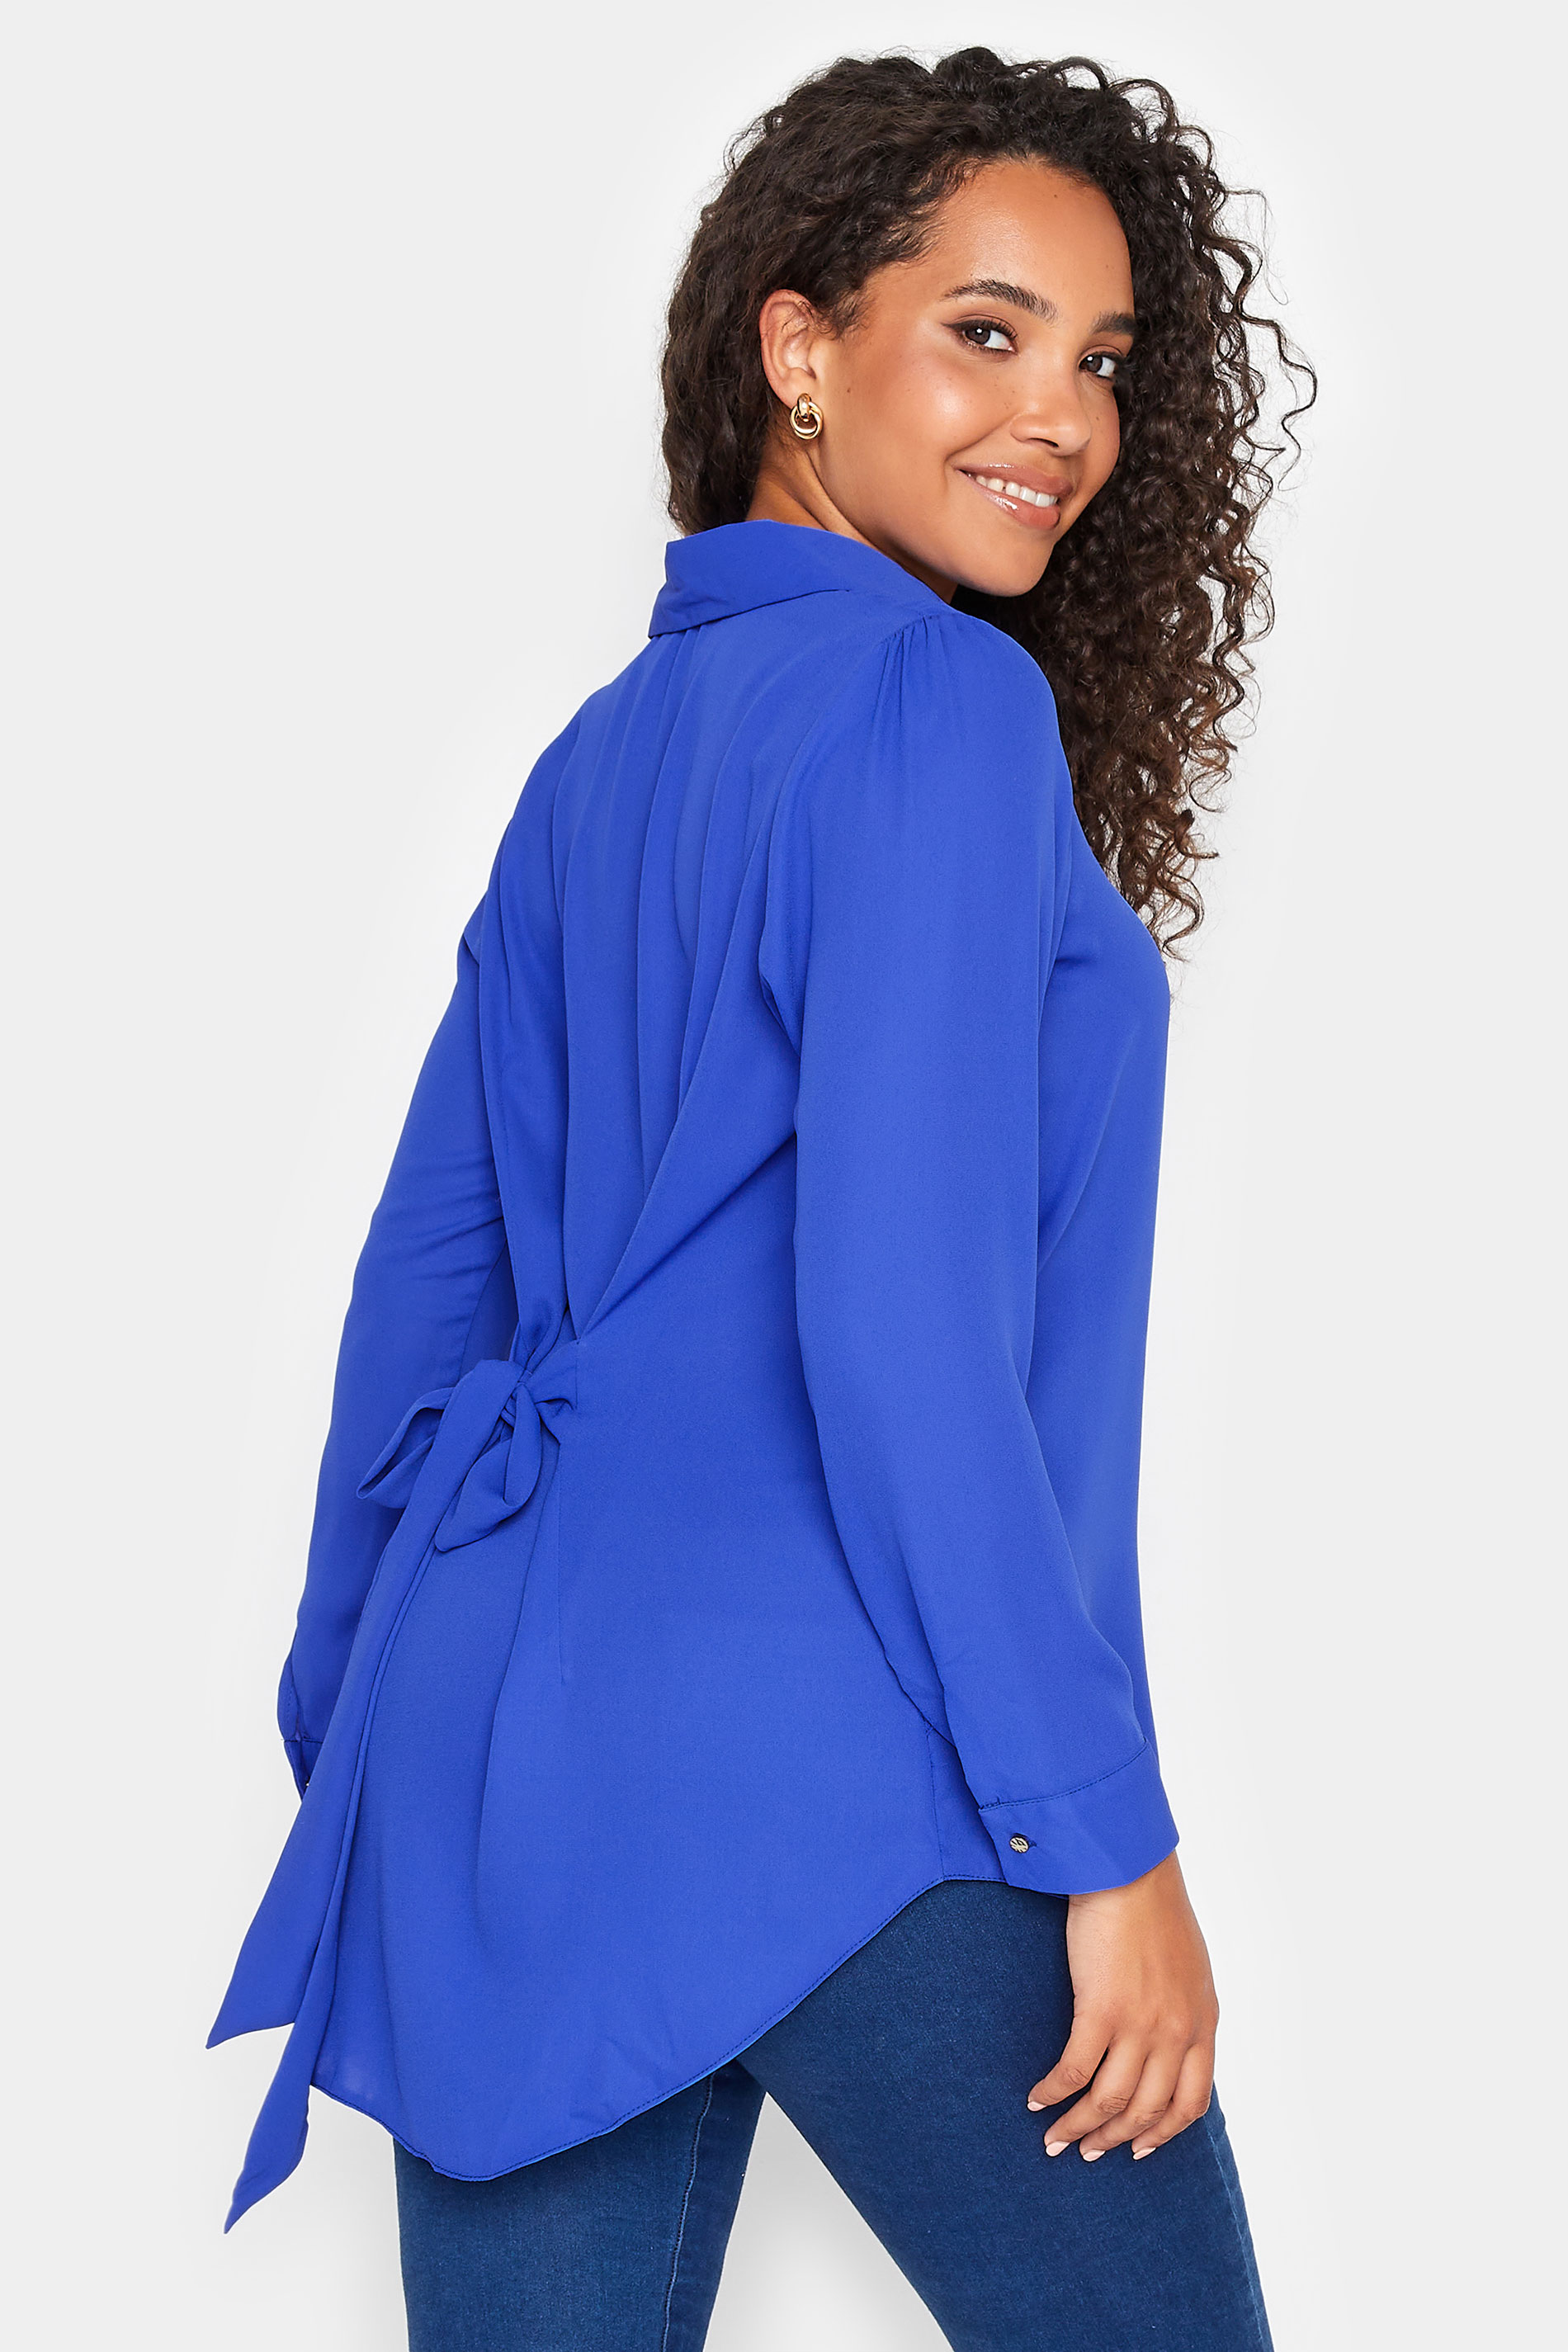 M&Co Cobalt Blue Button Through Tunic Shirt | M&Co 3